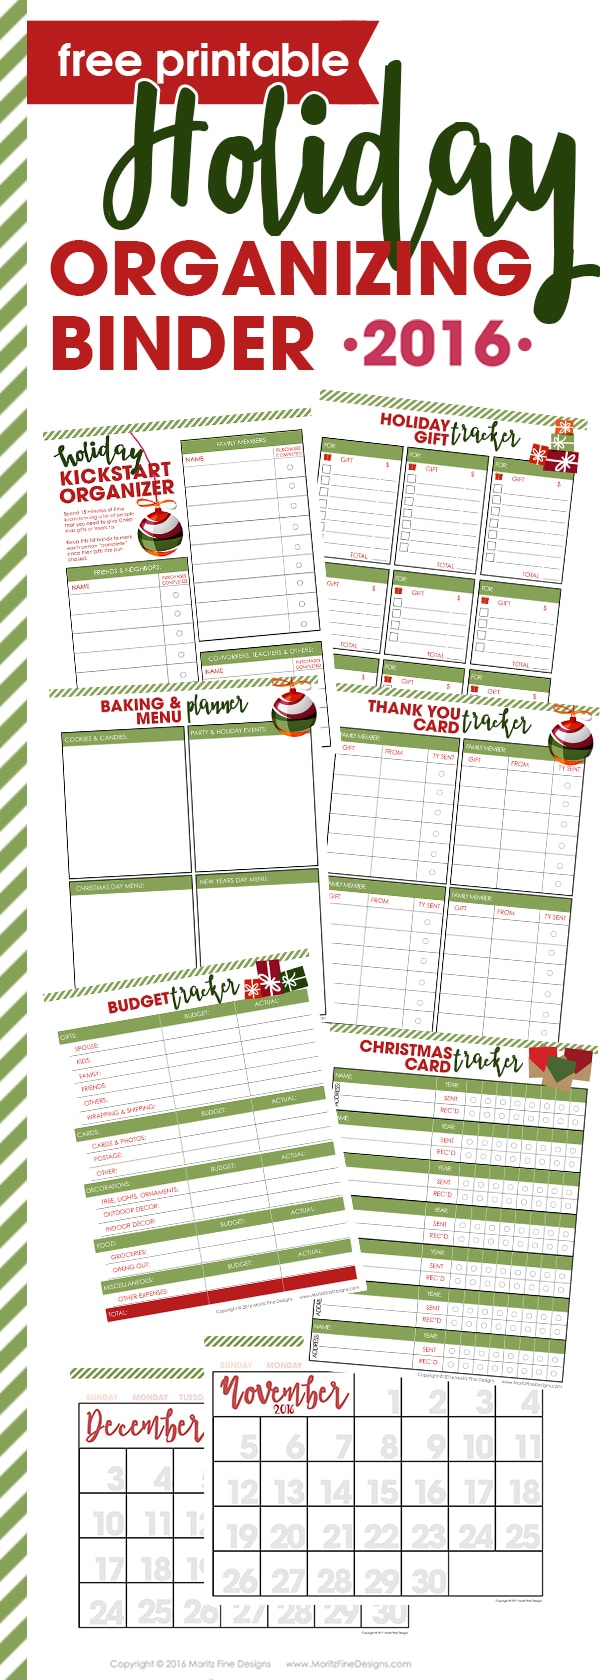 Ready to enjoy a stress-free holiday season? Plan, prepare and execute a fantastic holiday season with the free printable 2016 Holiday Organizing Binder.